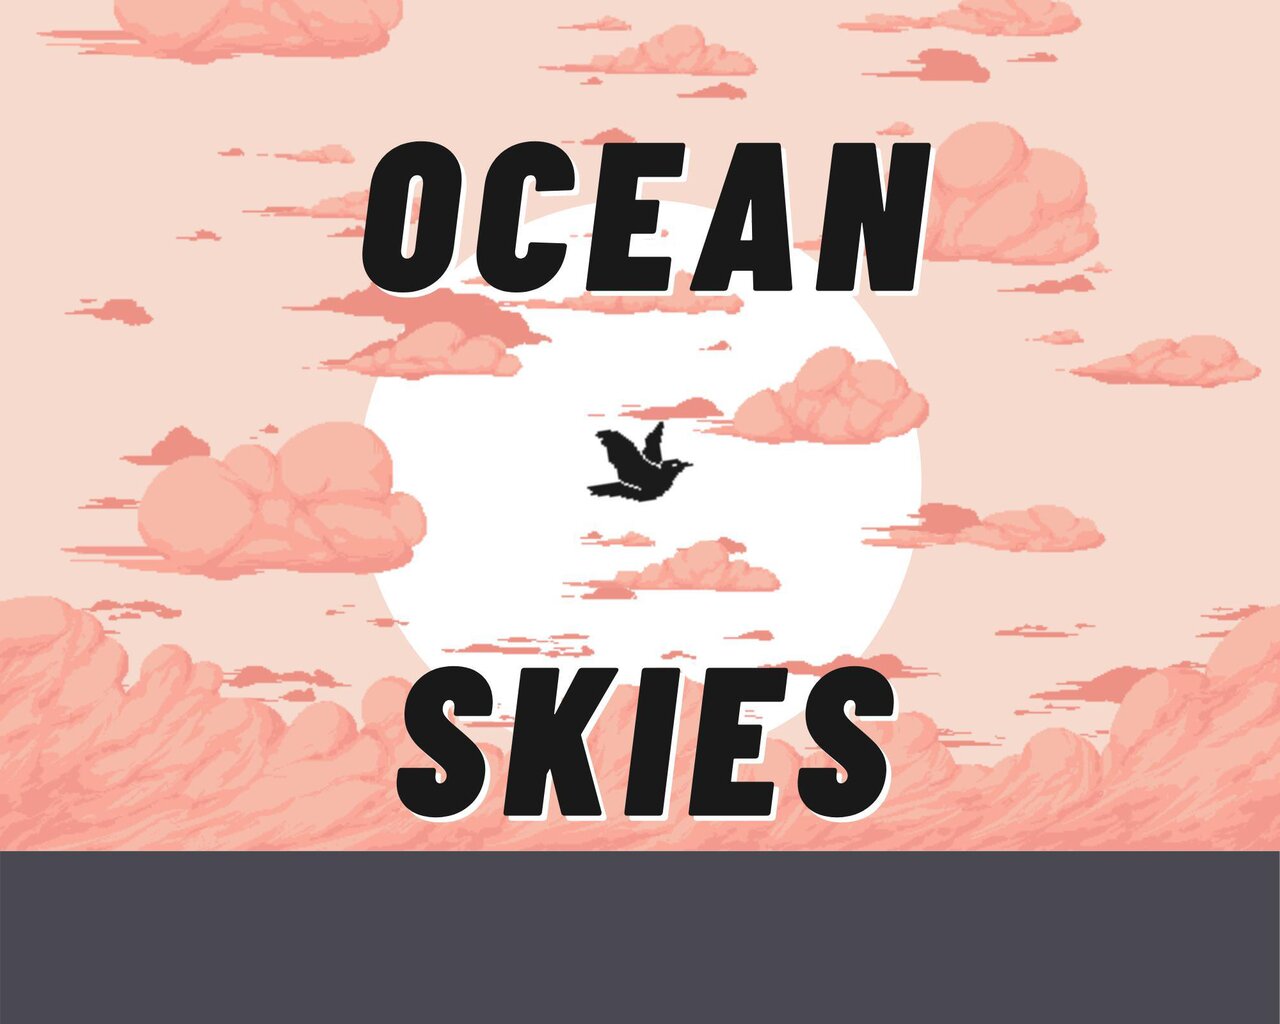 Sky demo. Ocean games logo.